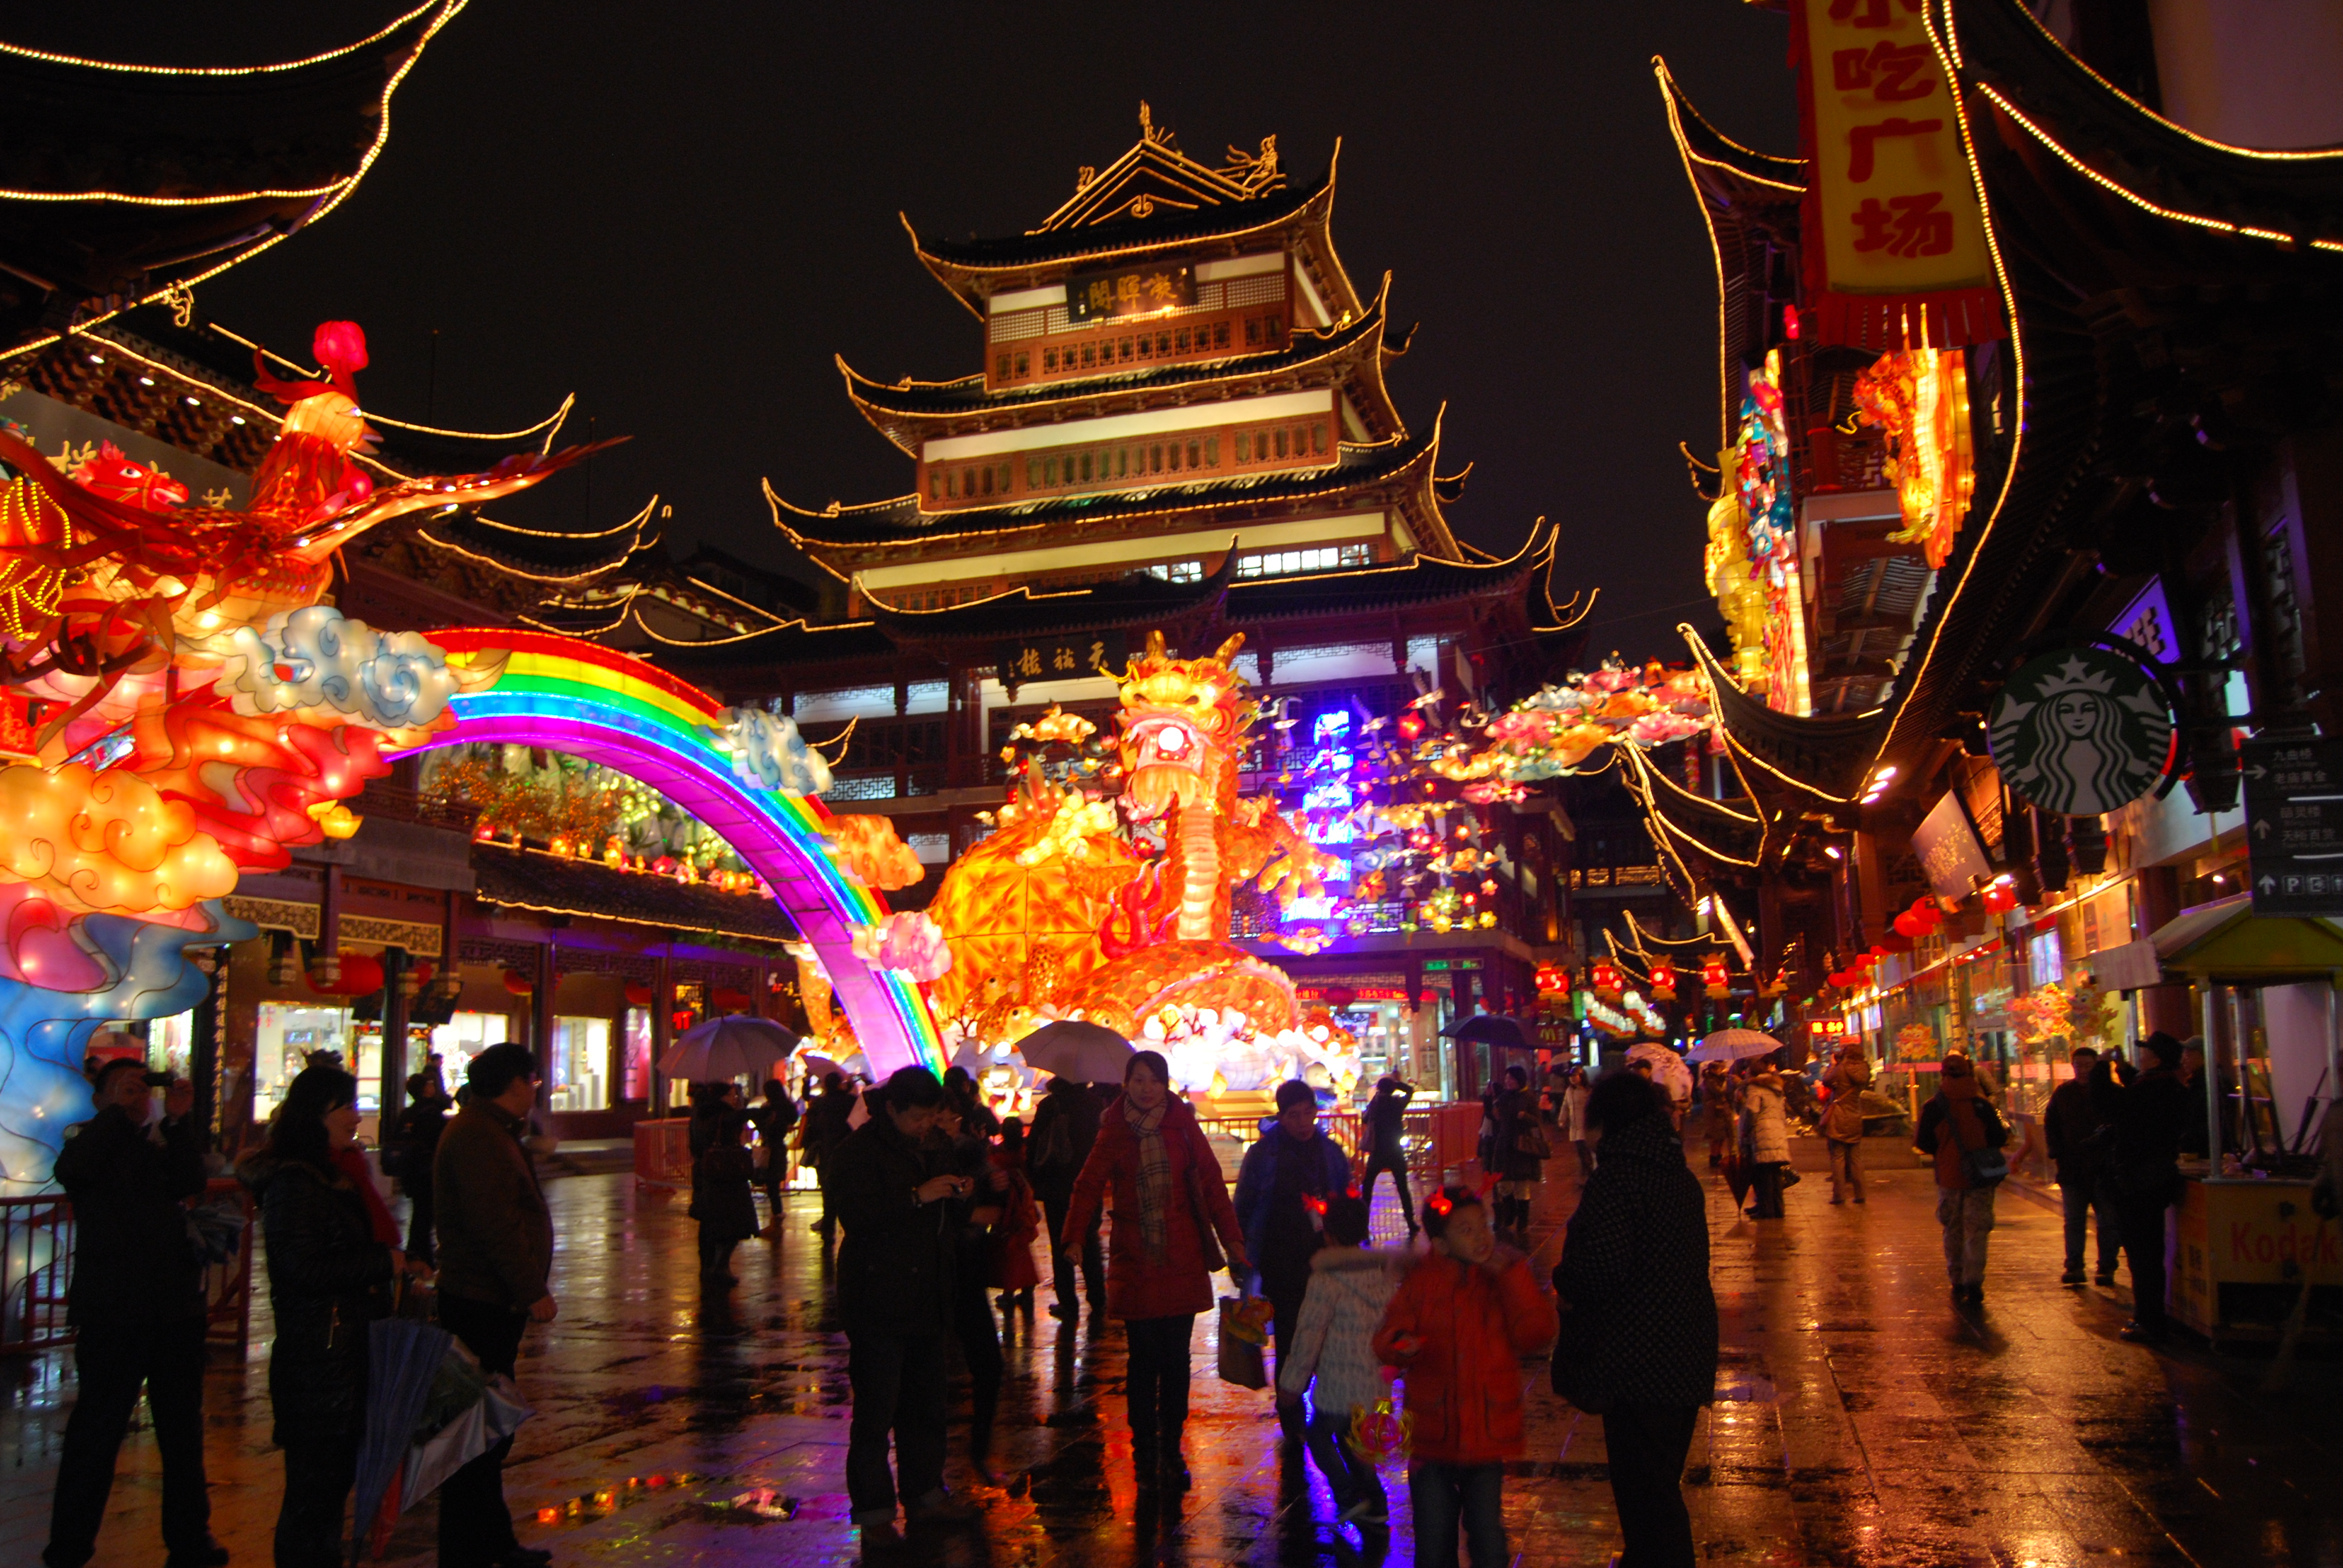 China-Shanghai-YuGarden-the_Lantern_Festival-2012_1846